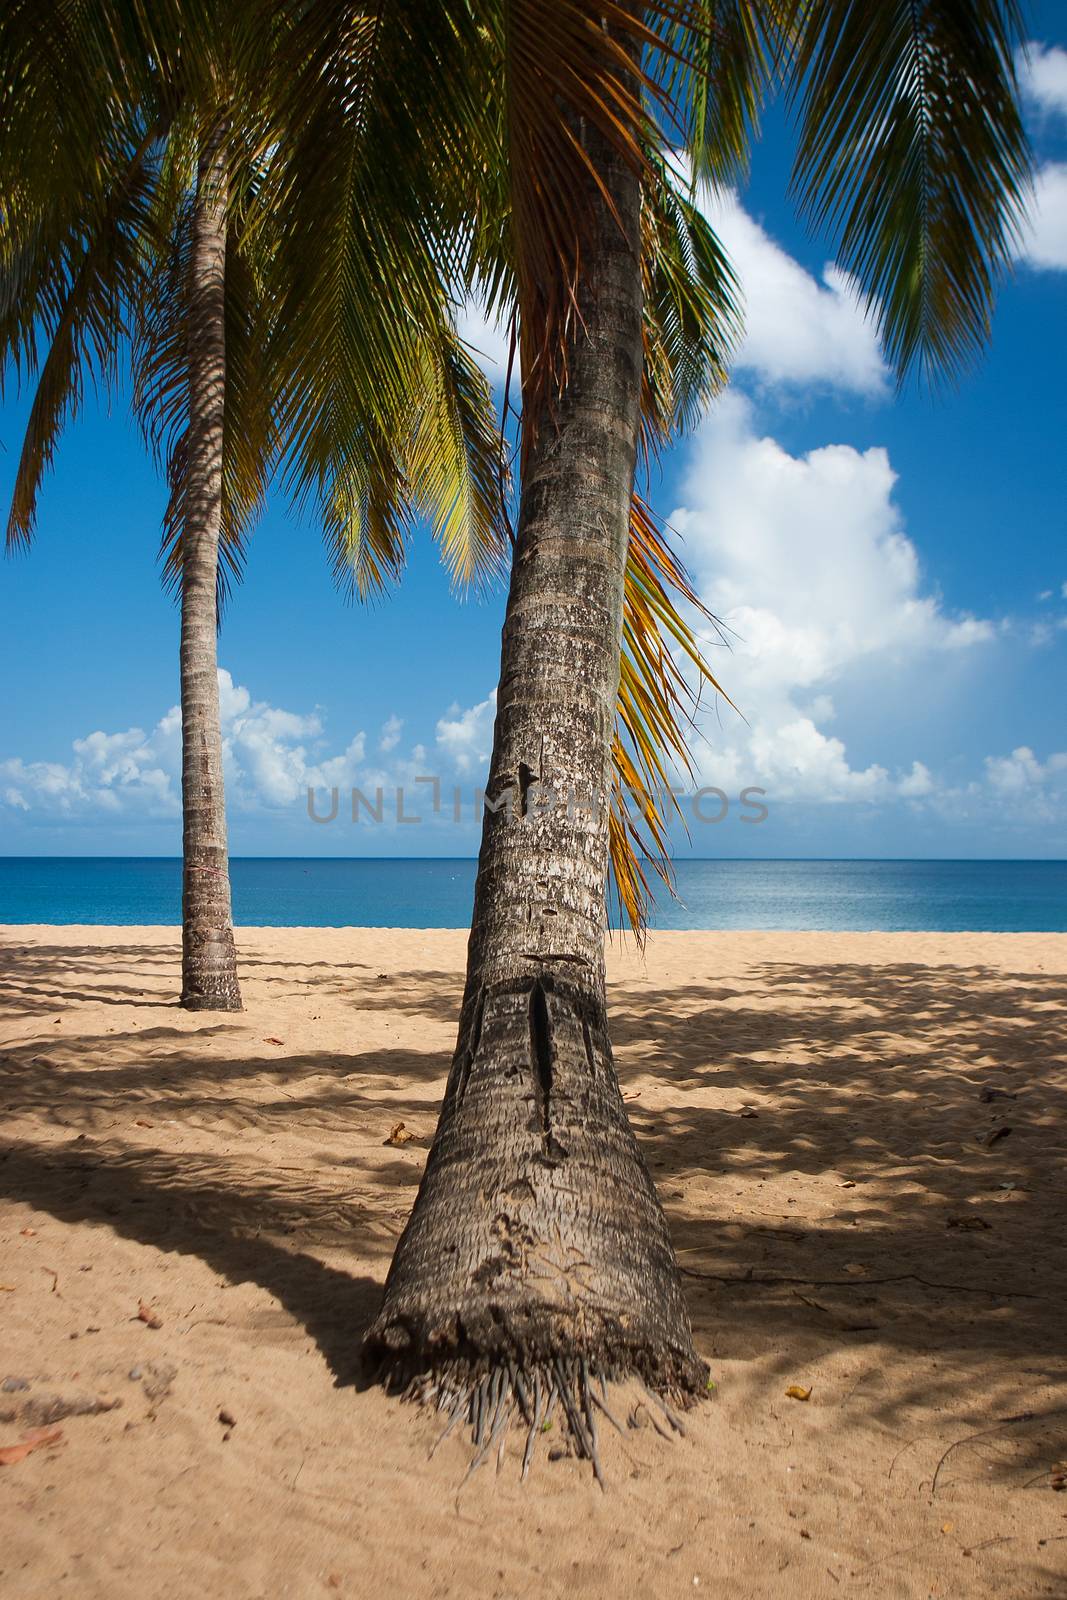 Beach of Grande Anse, Deshaies, Guadeloupe island